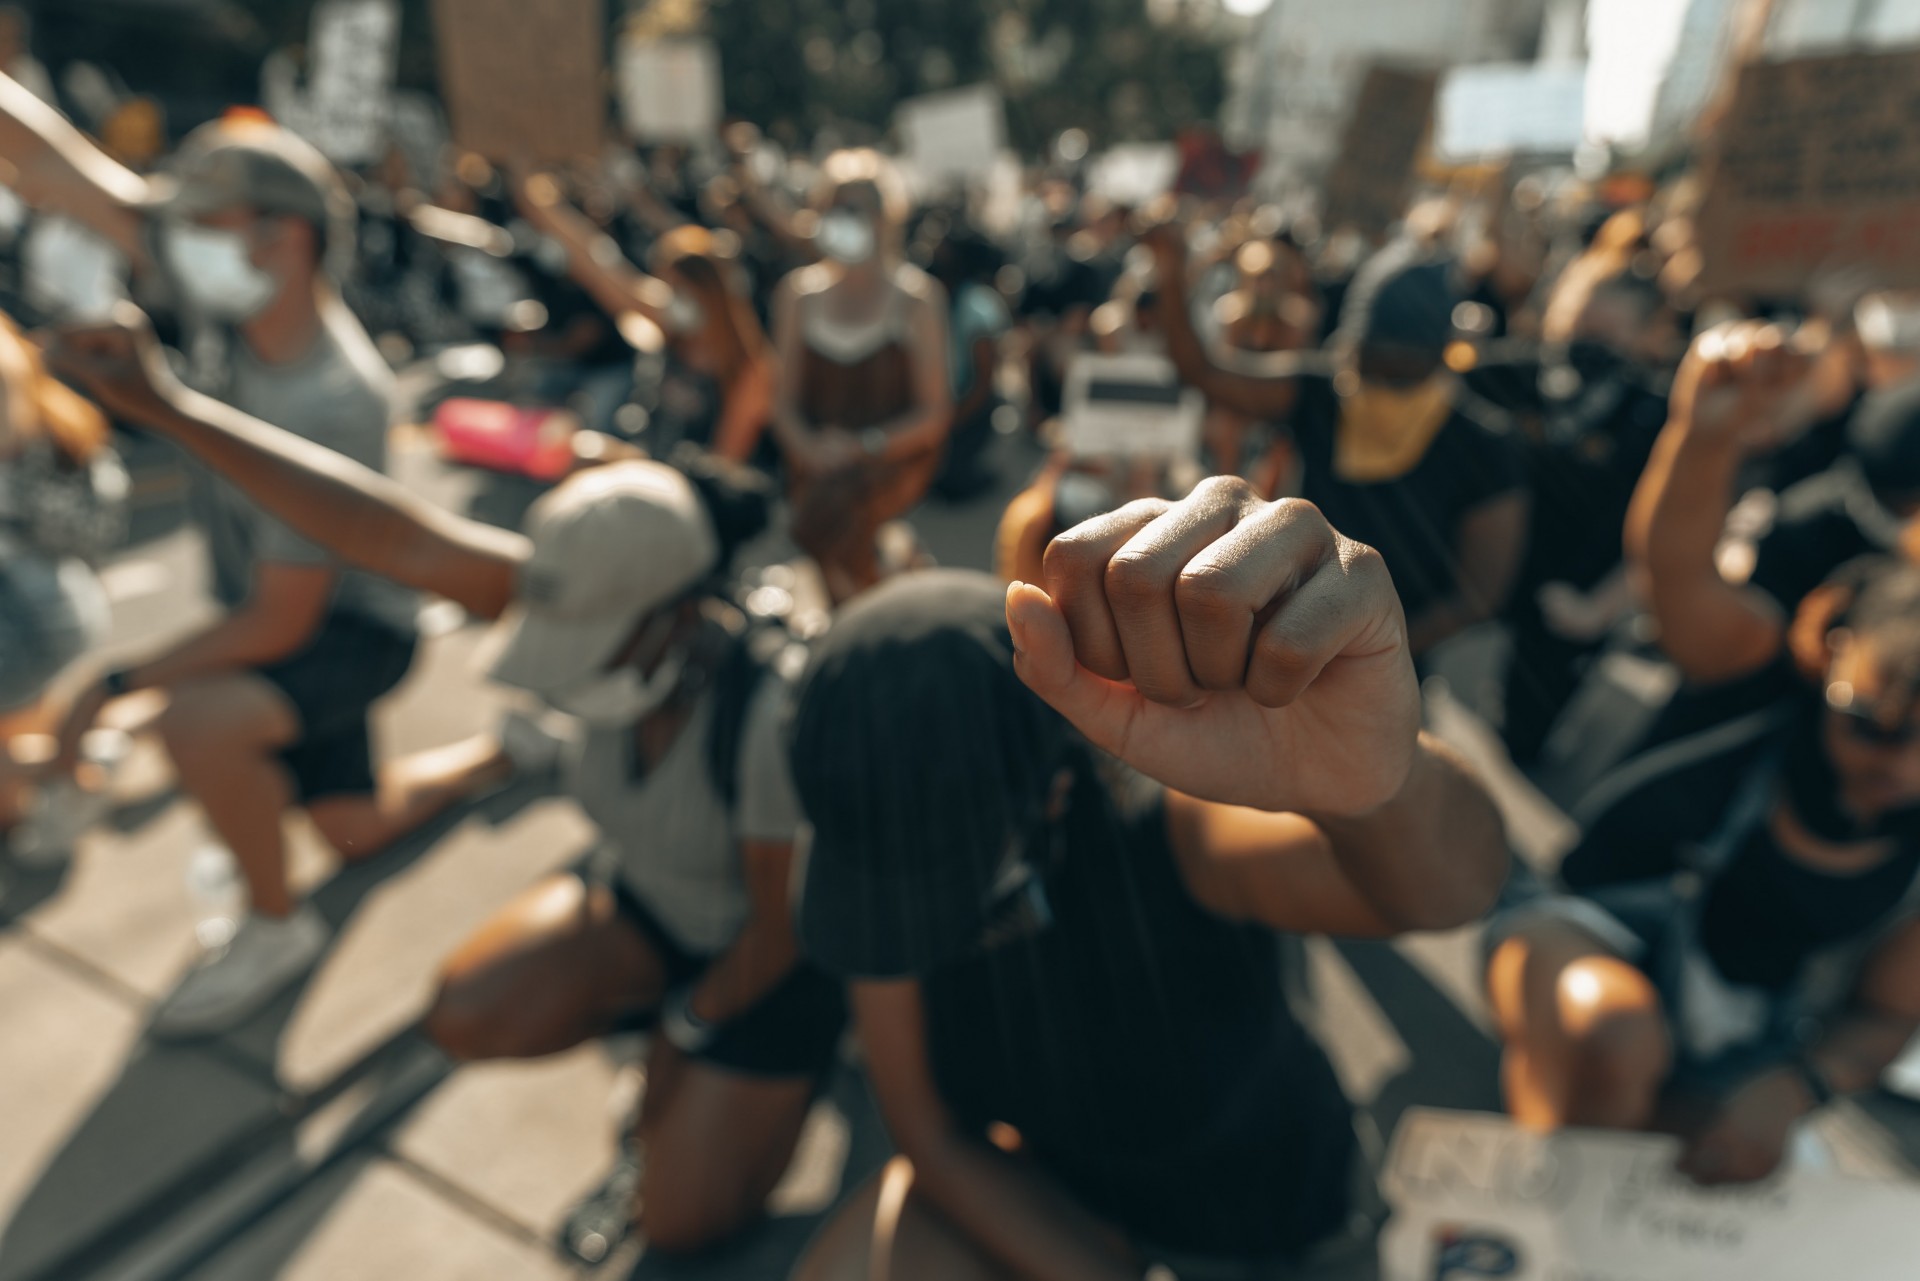 2020: Protest og mobilisering mot alle odds